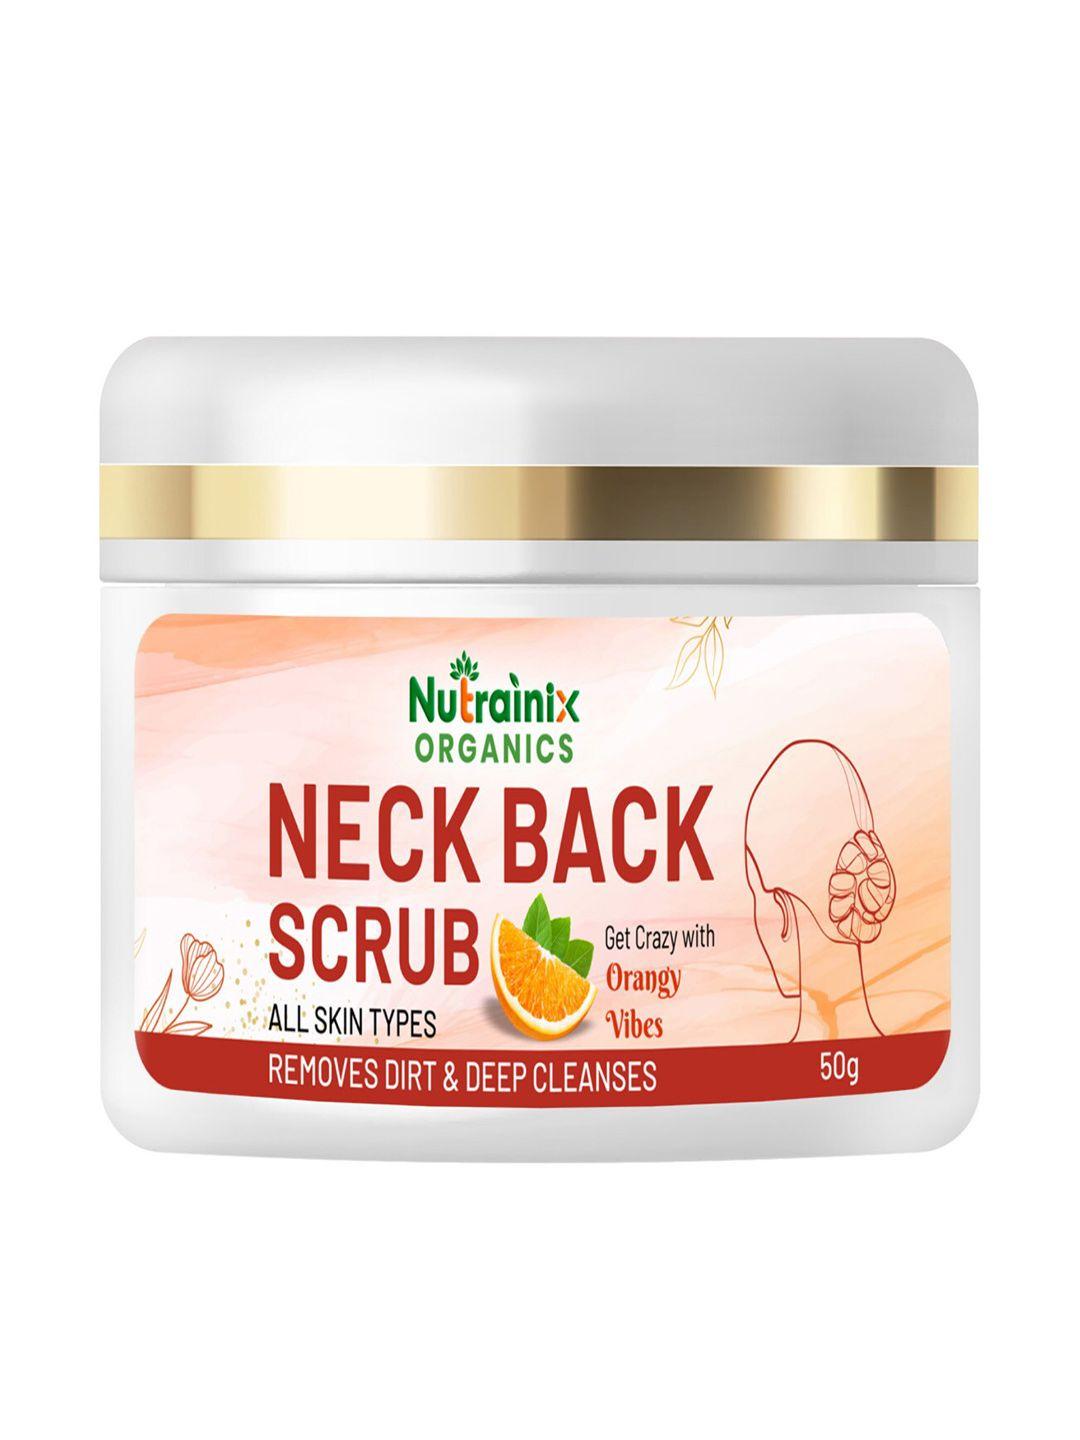 nutrainix organics peach body & facial cleaning scrub